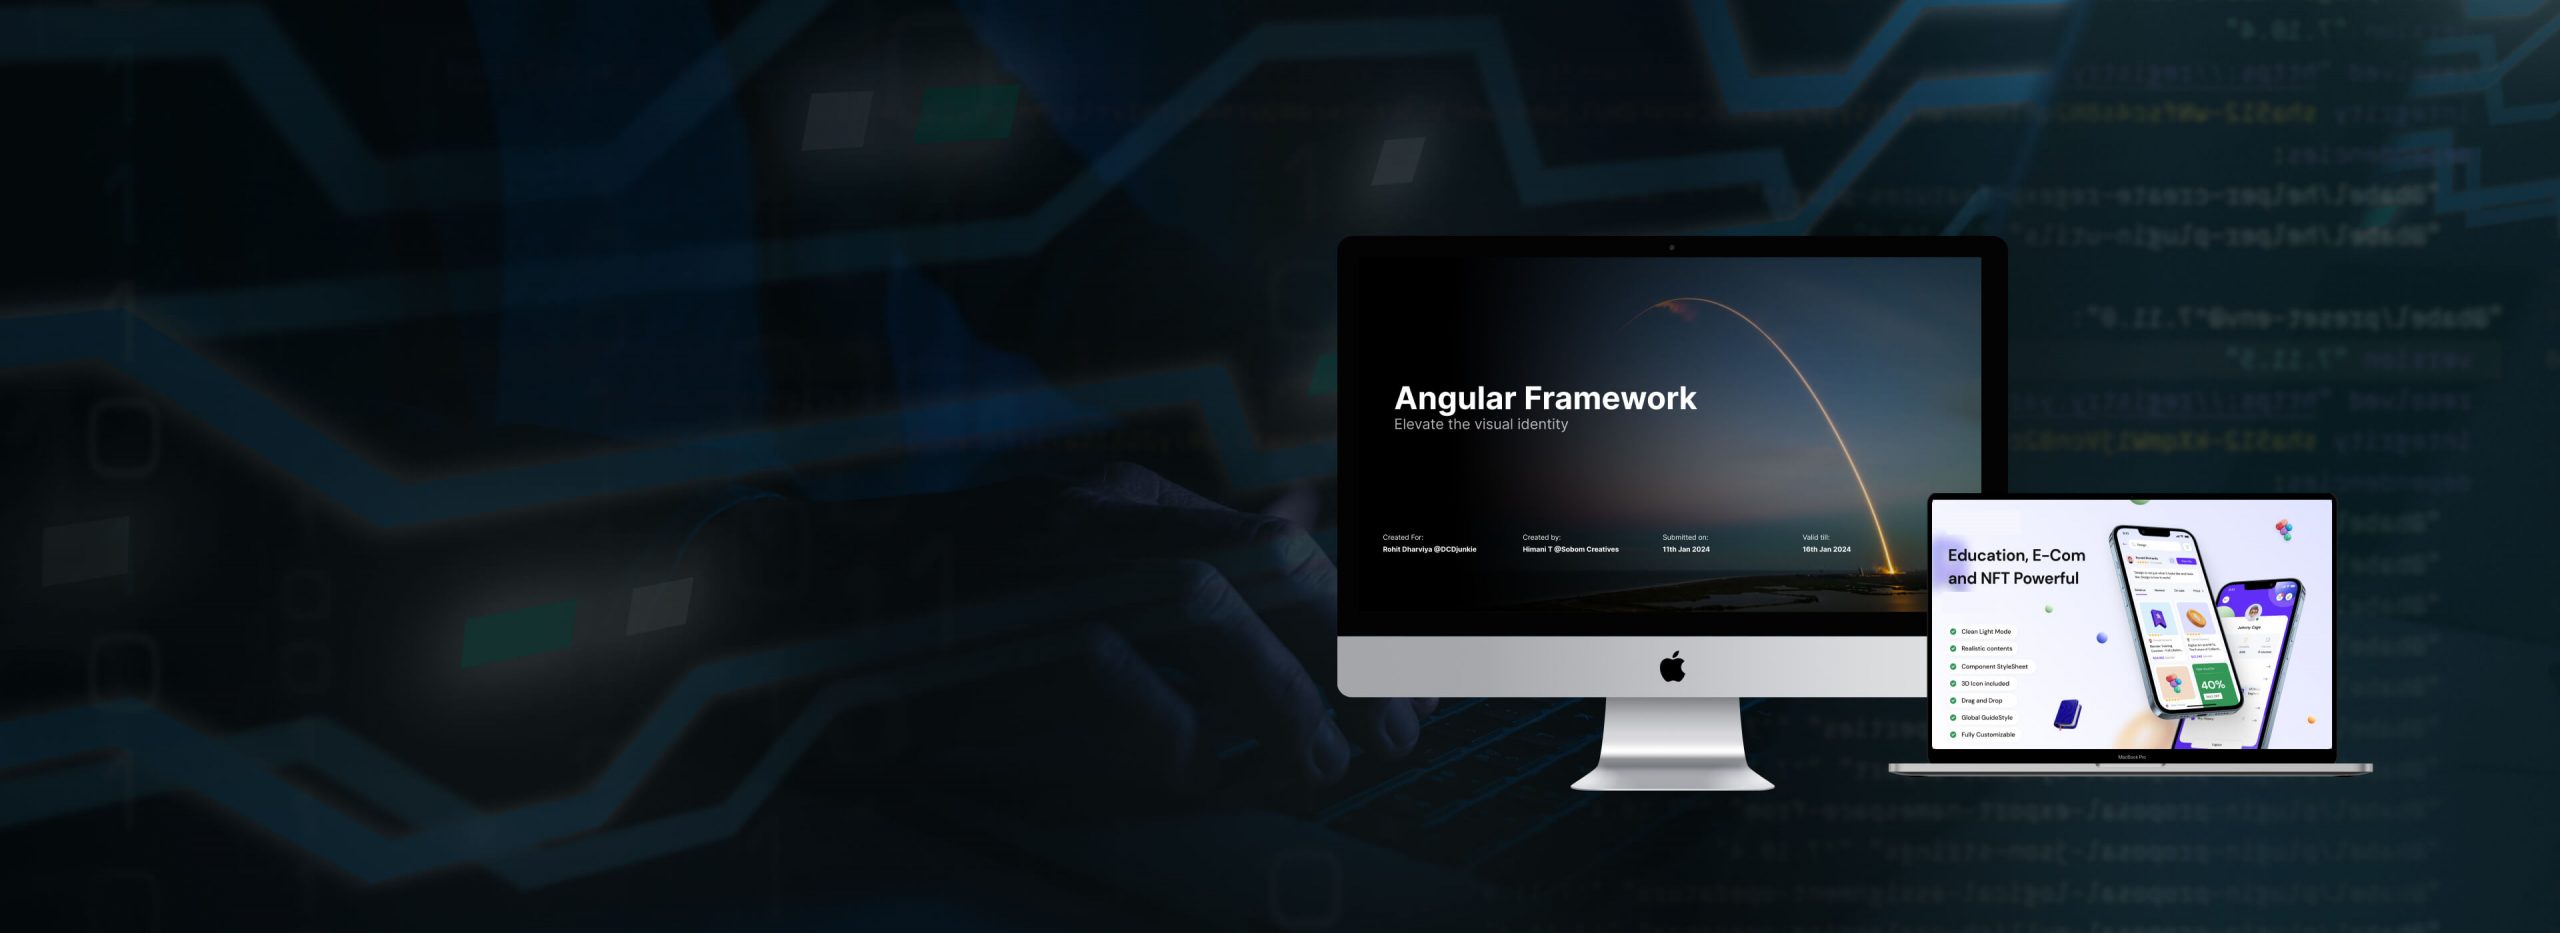 angular framework banner